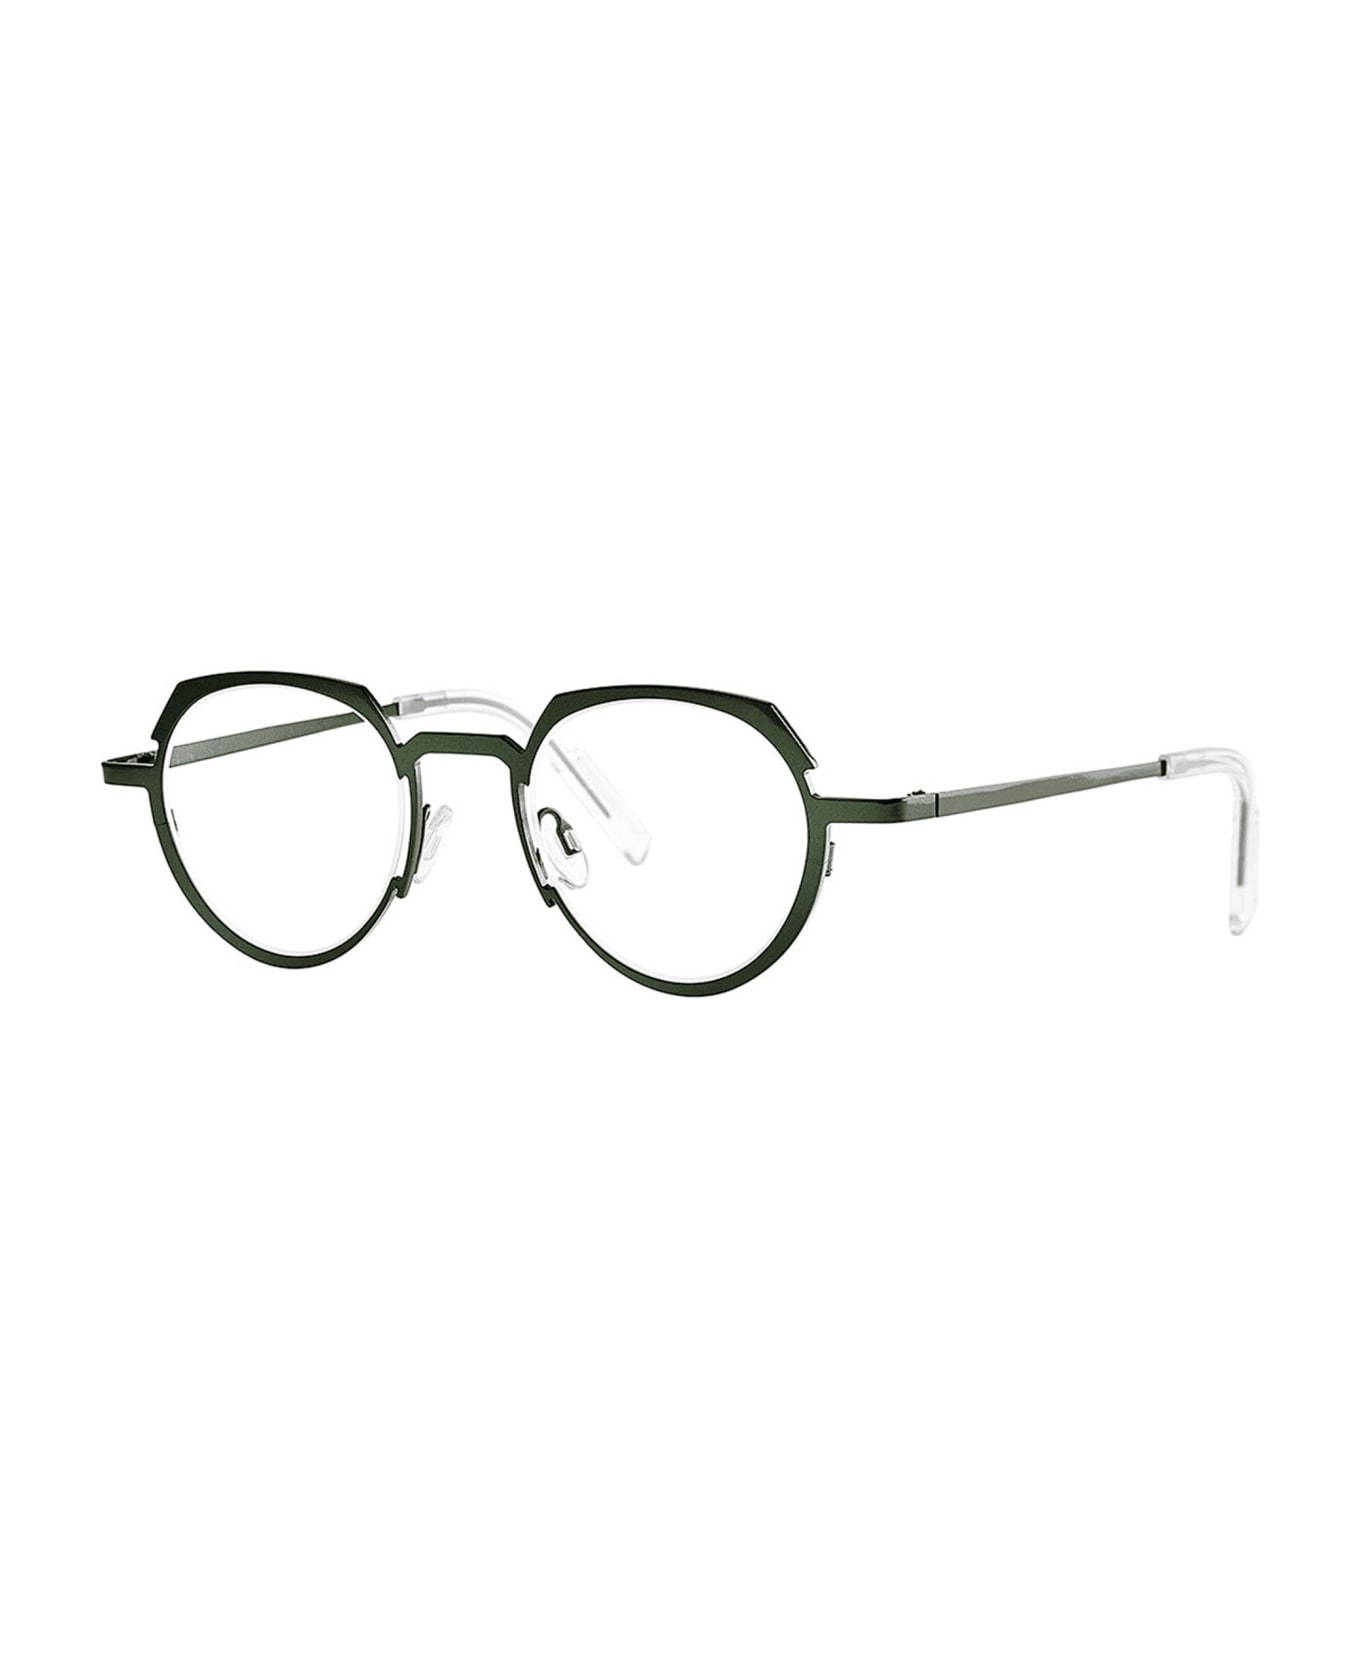 Theo Eyewear Receiver - 508 Sanremo Green Rx Glasses - green